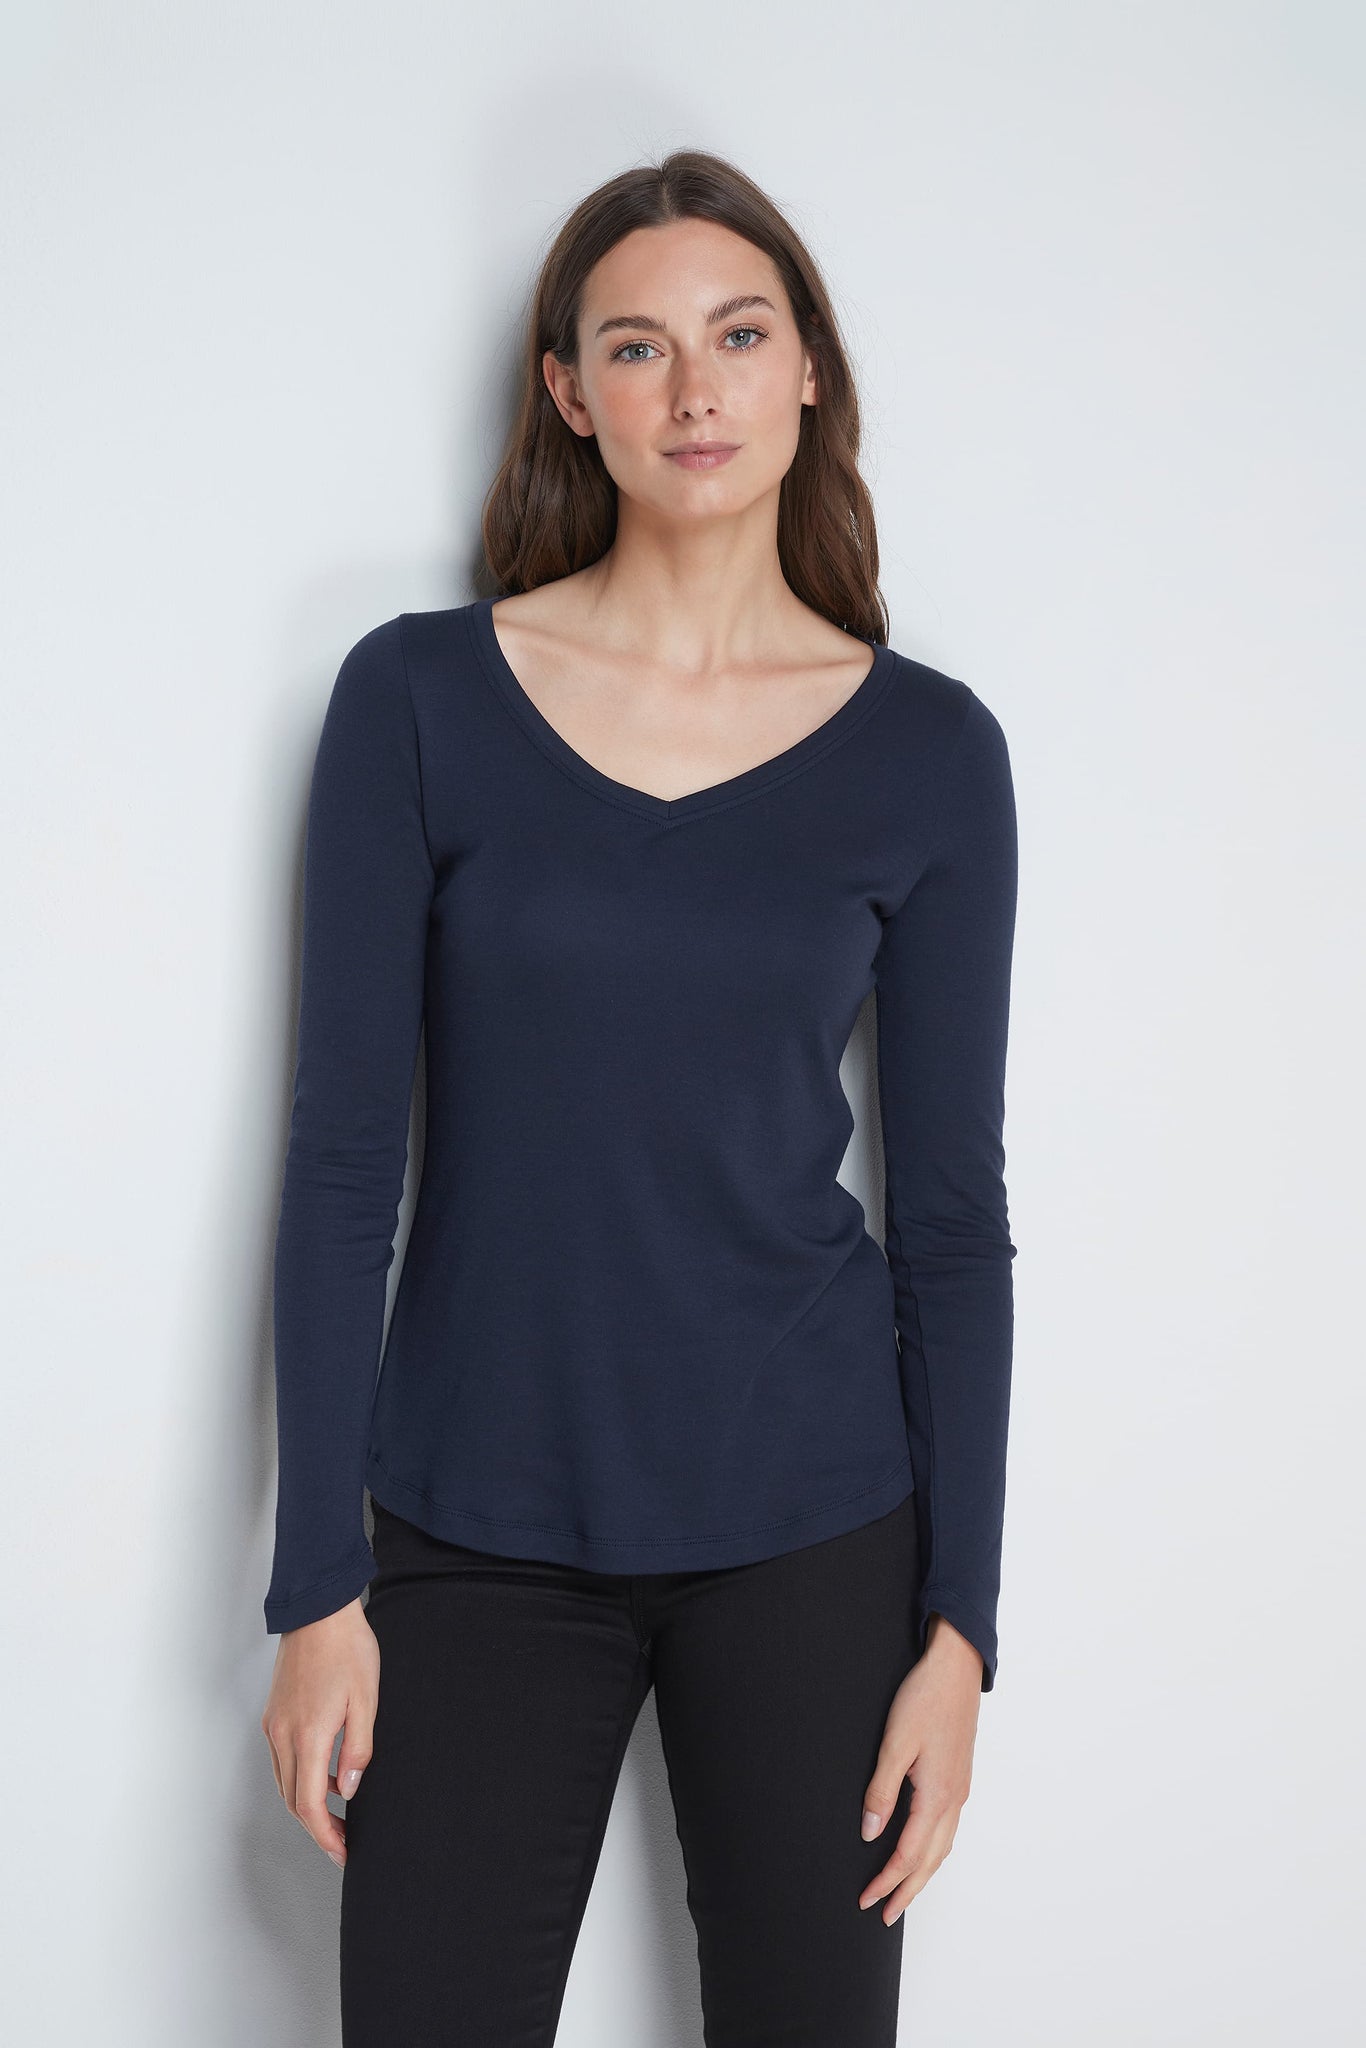 Women's High Quality Long Sleeve V-Neck T-Shirt - Comfortable V-Neck T-Shirt - Flattering Long Sleeve T-Shirt - Soft Navy Long Sleeve V-Neck by Lavender Hill Clothing